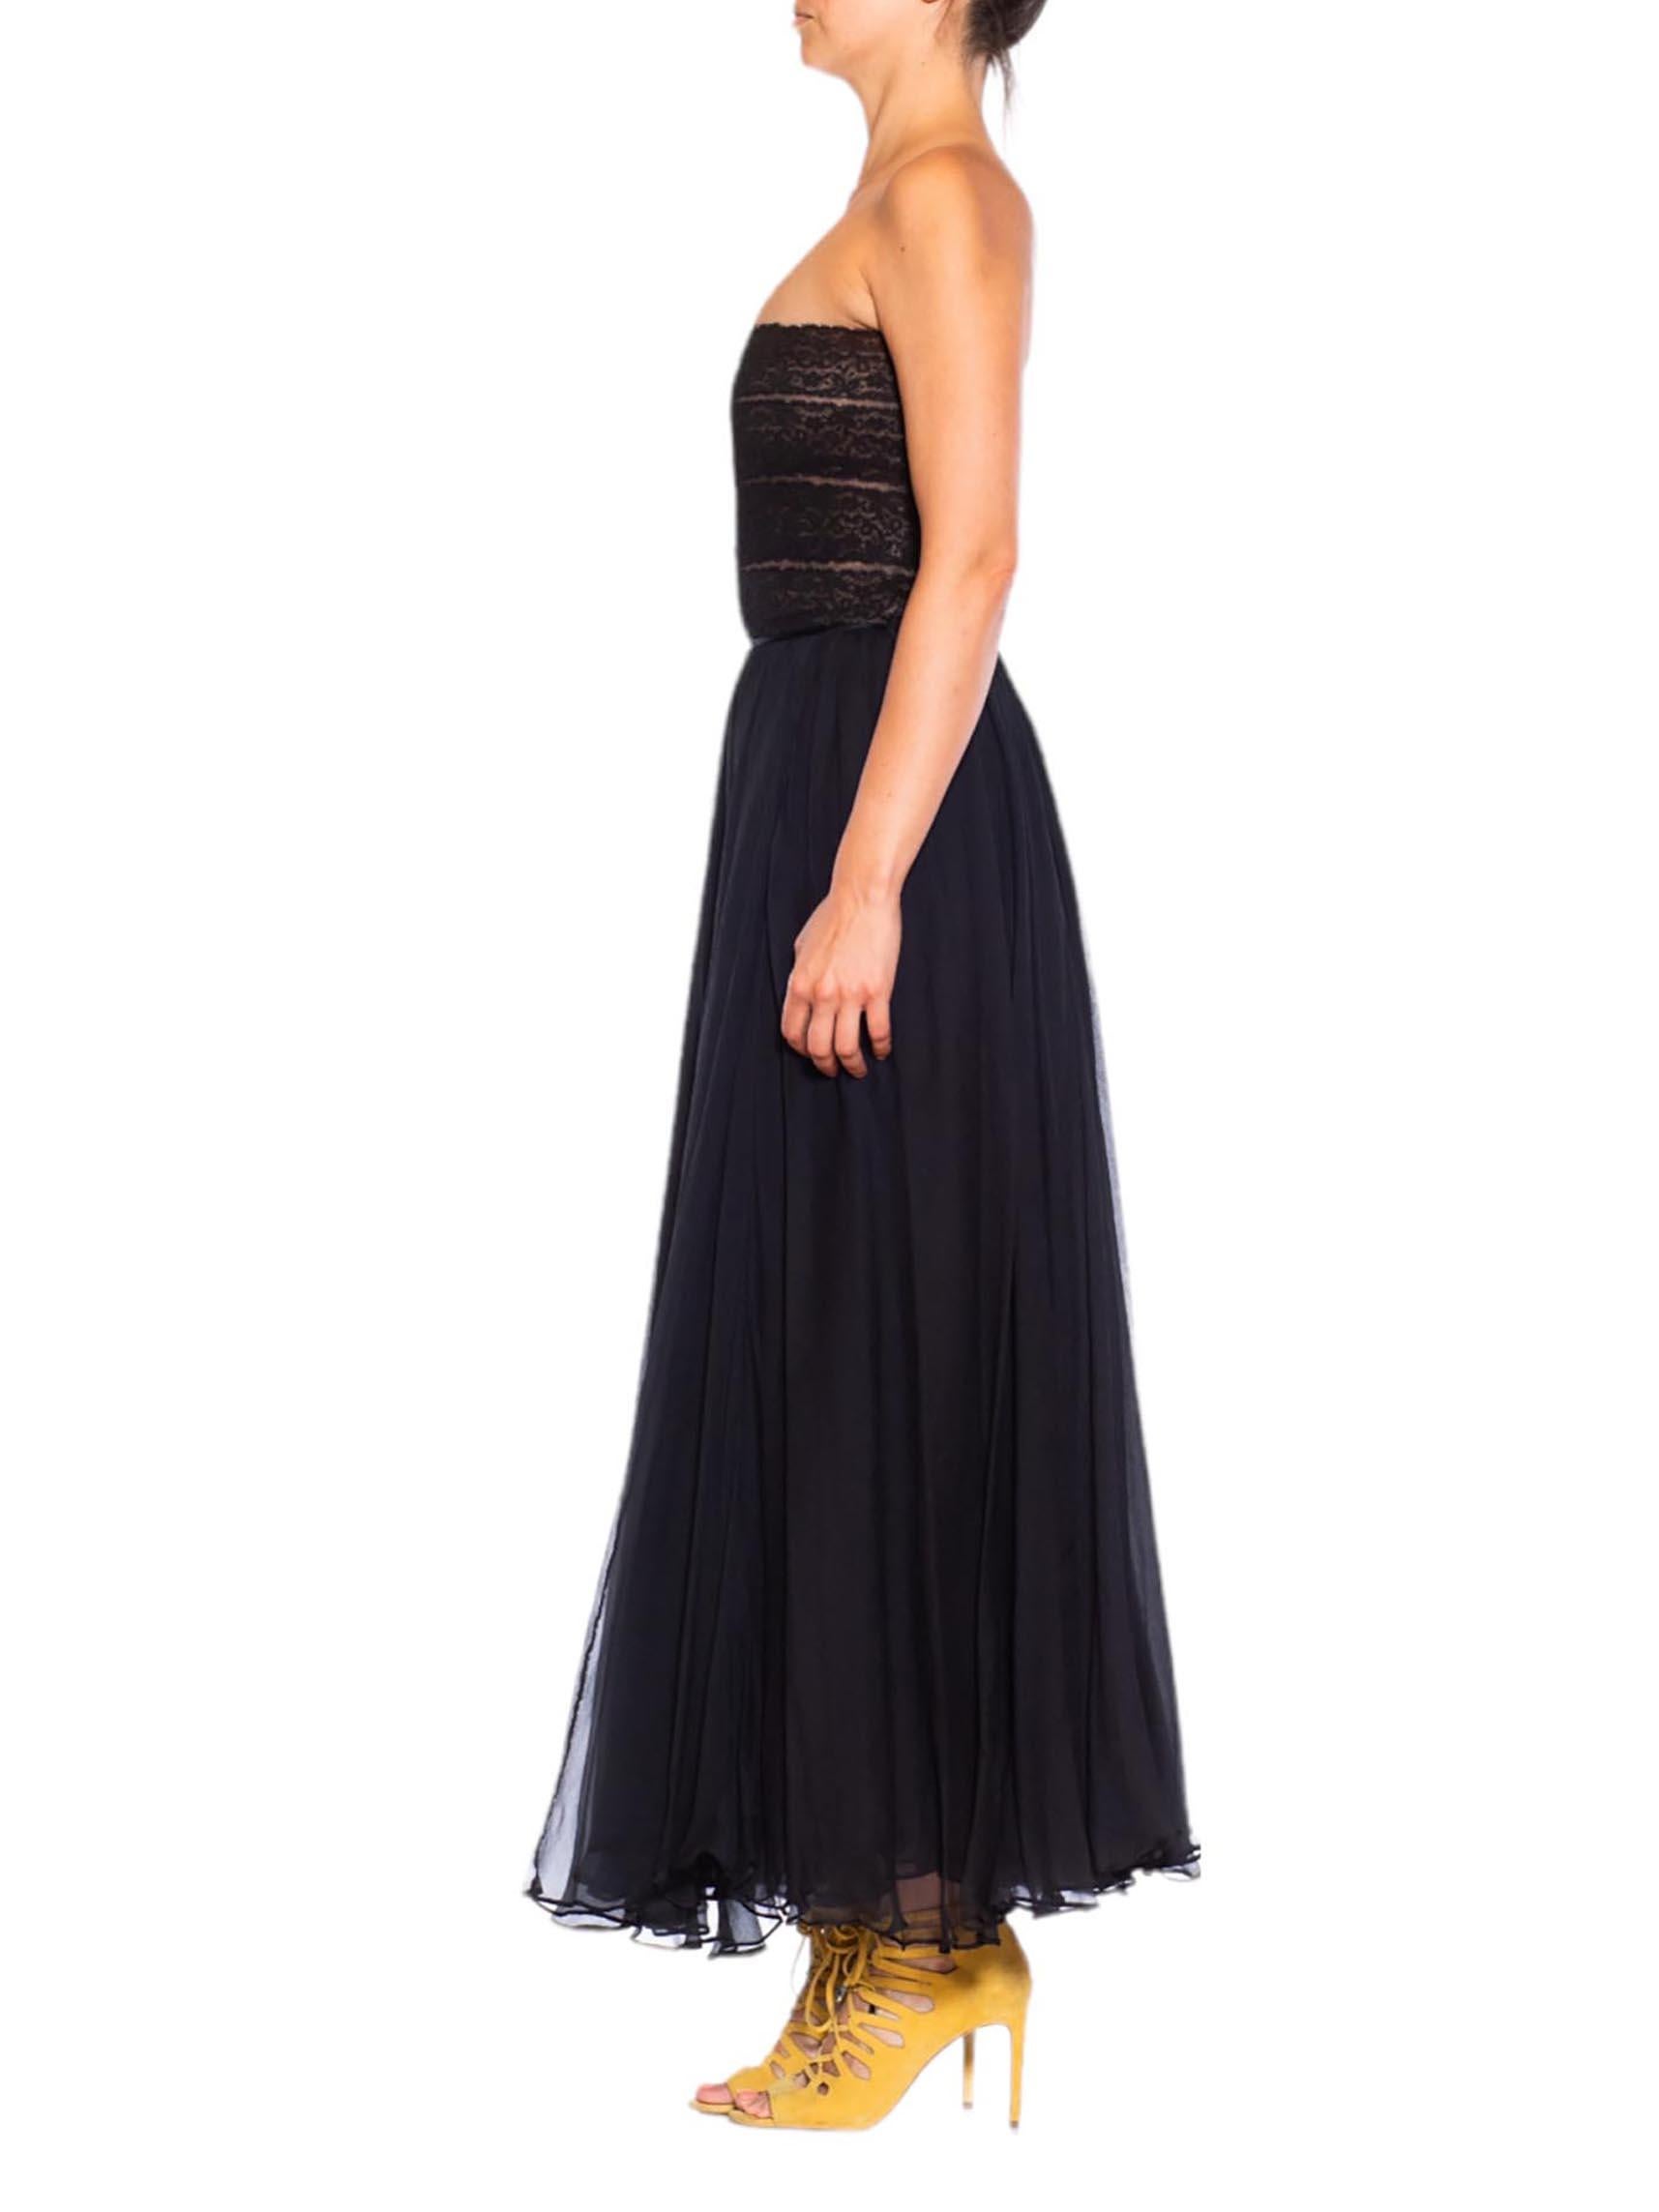 Women's 1980S OSCAR DE LA RENTA Black Silk Chiffon & Lace Strapless Gown XS For Sale